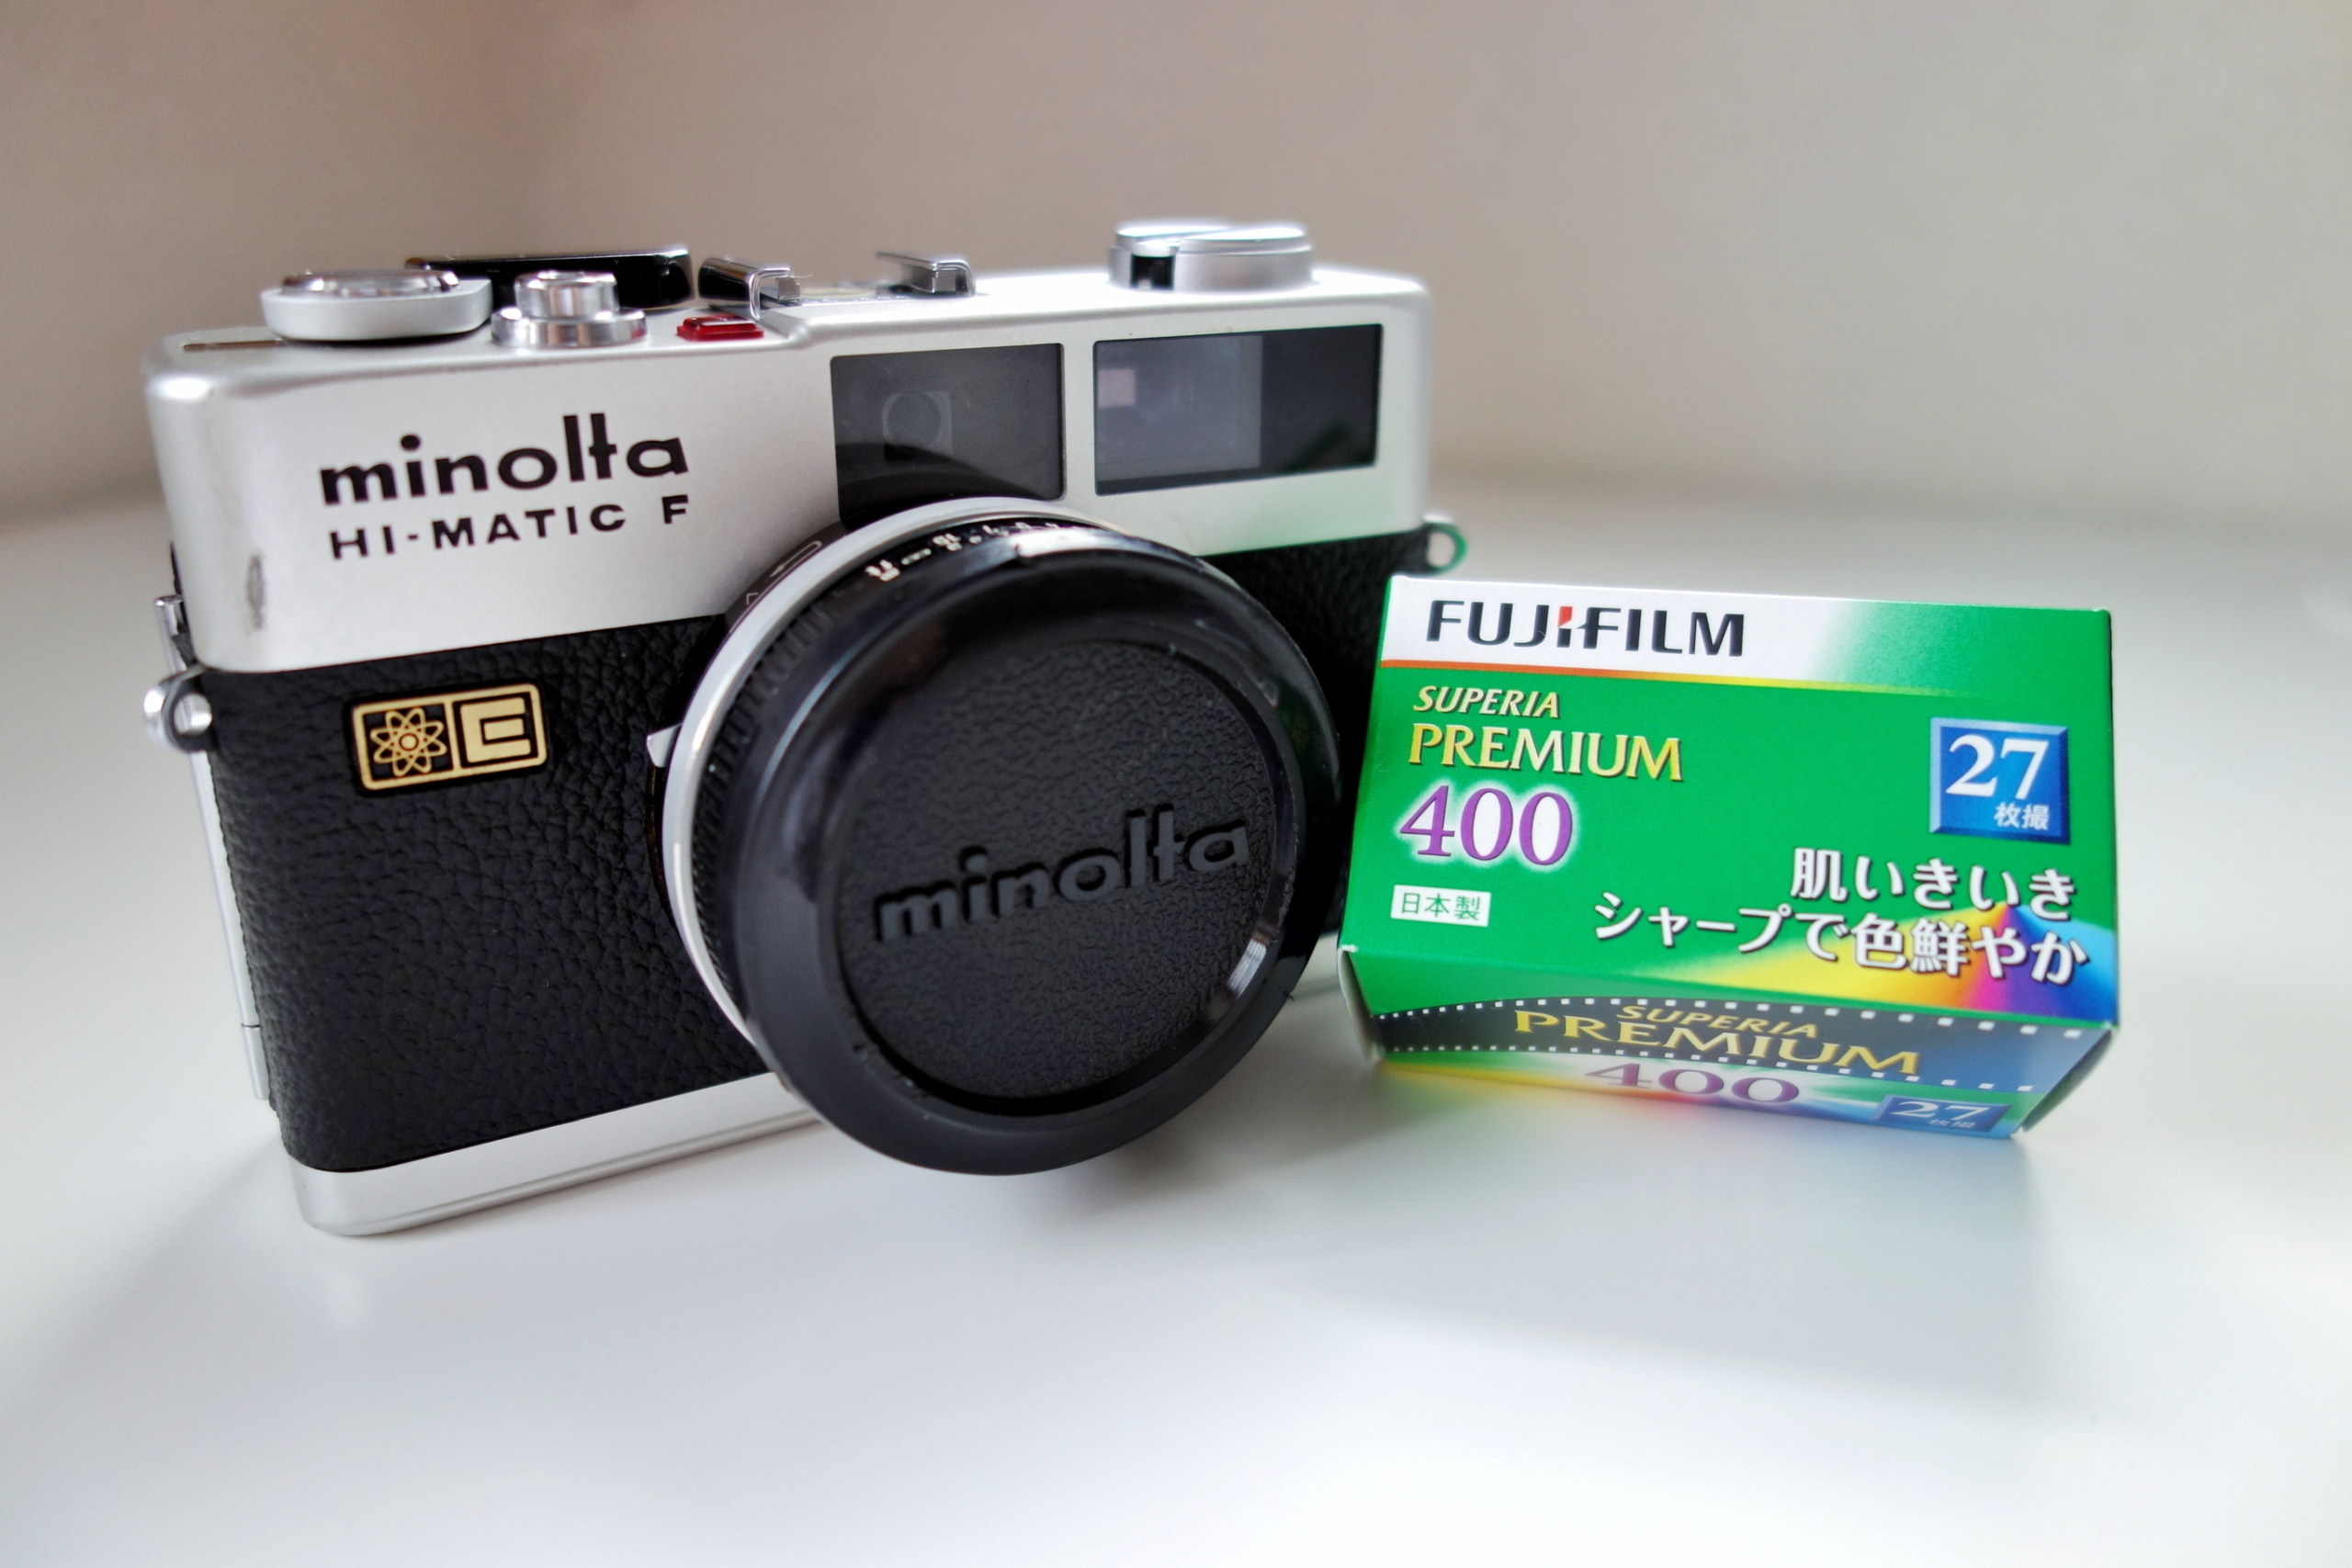 HI-MATIC F」という約50年前のカメラを買いました｜Colorful Clip